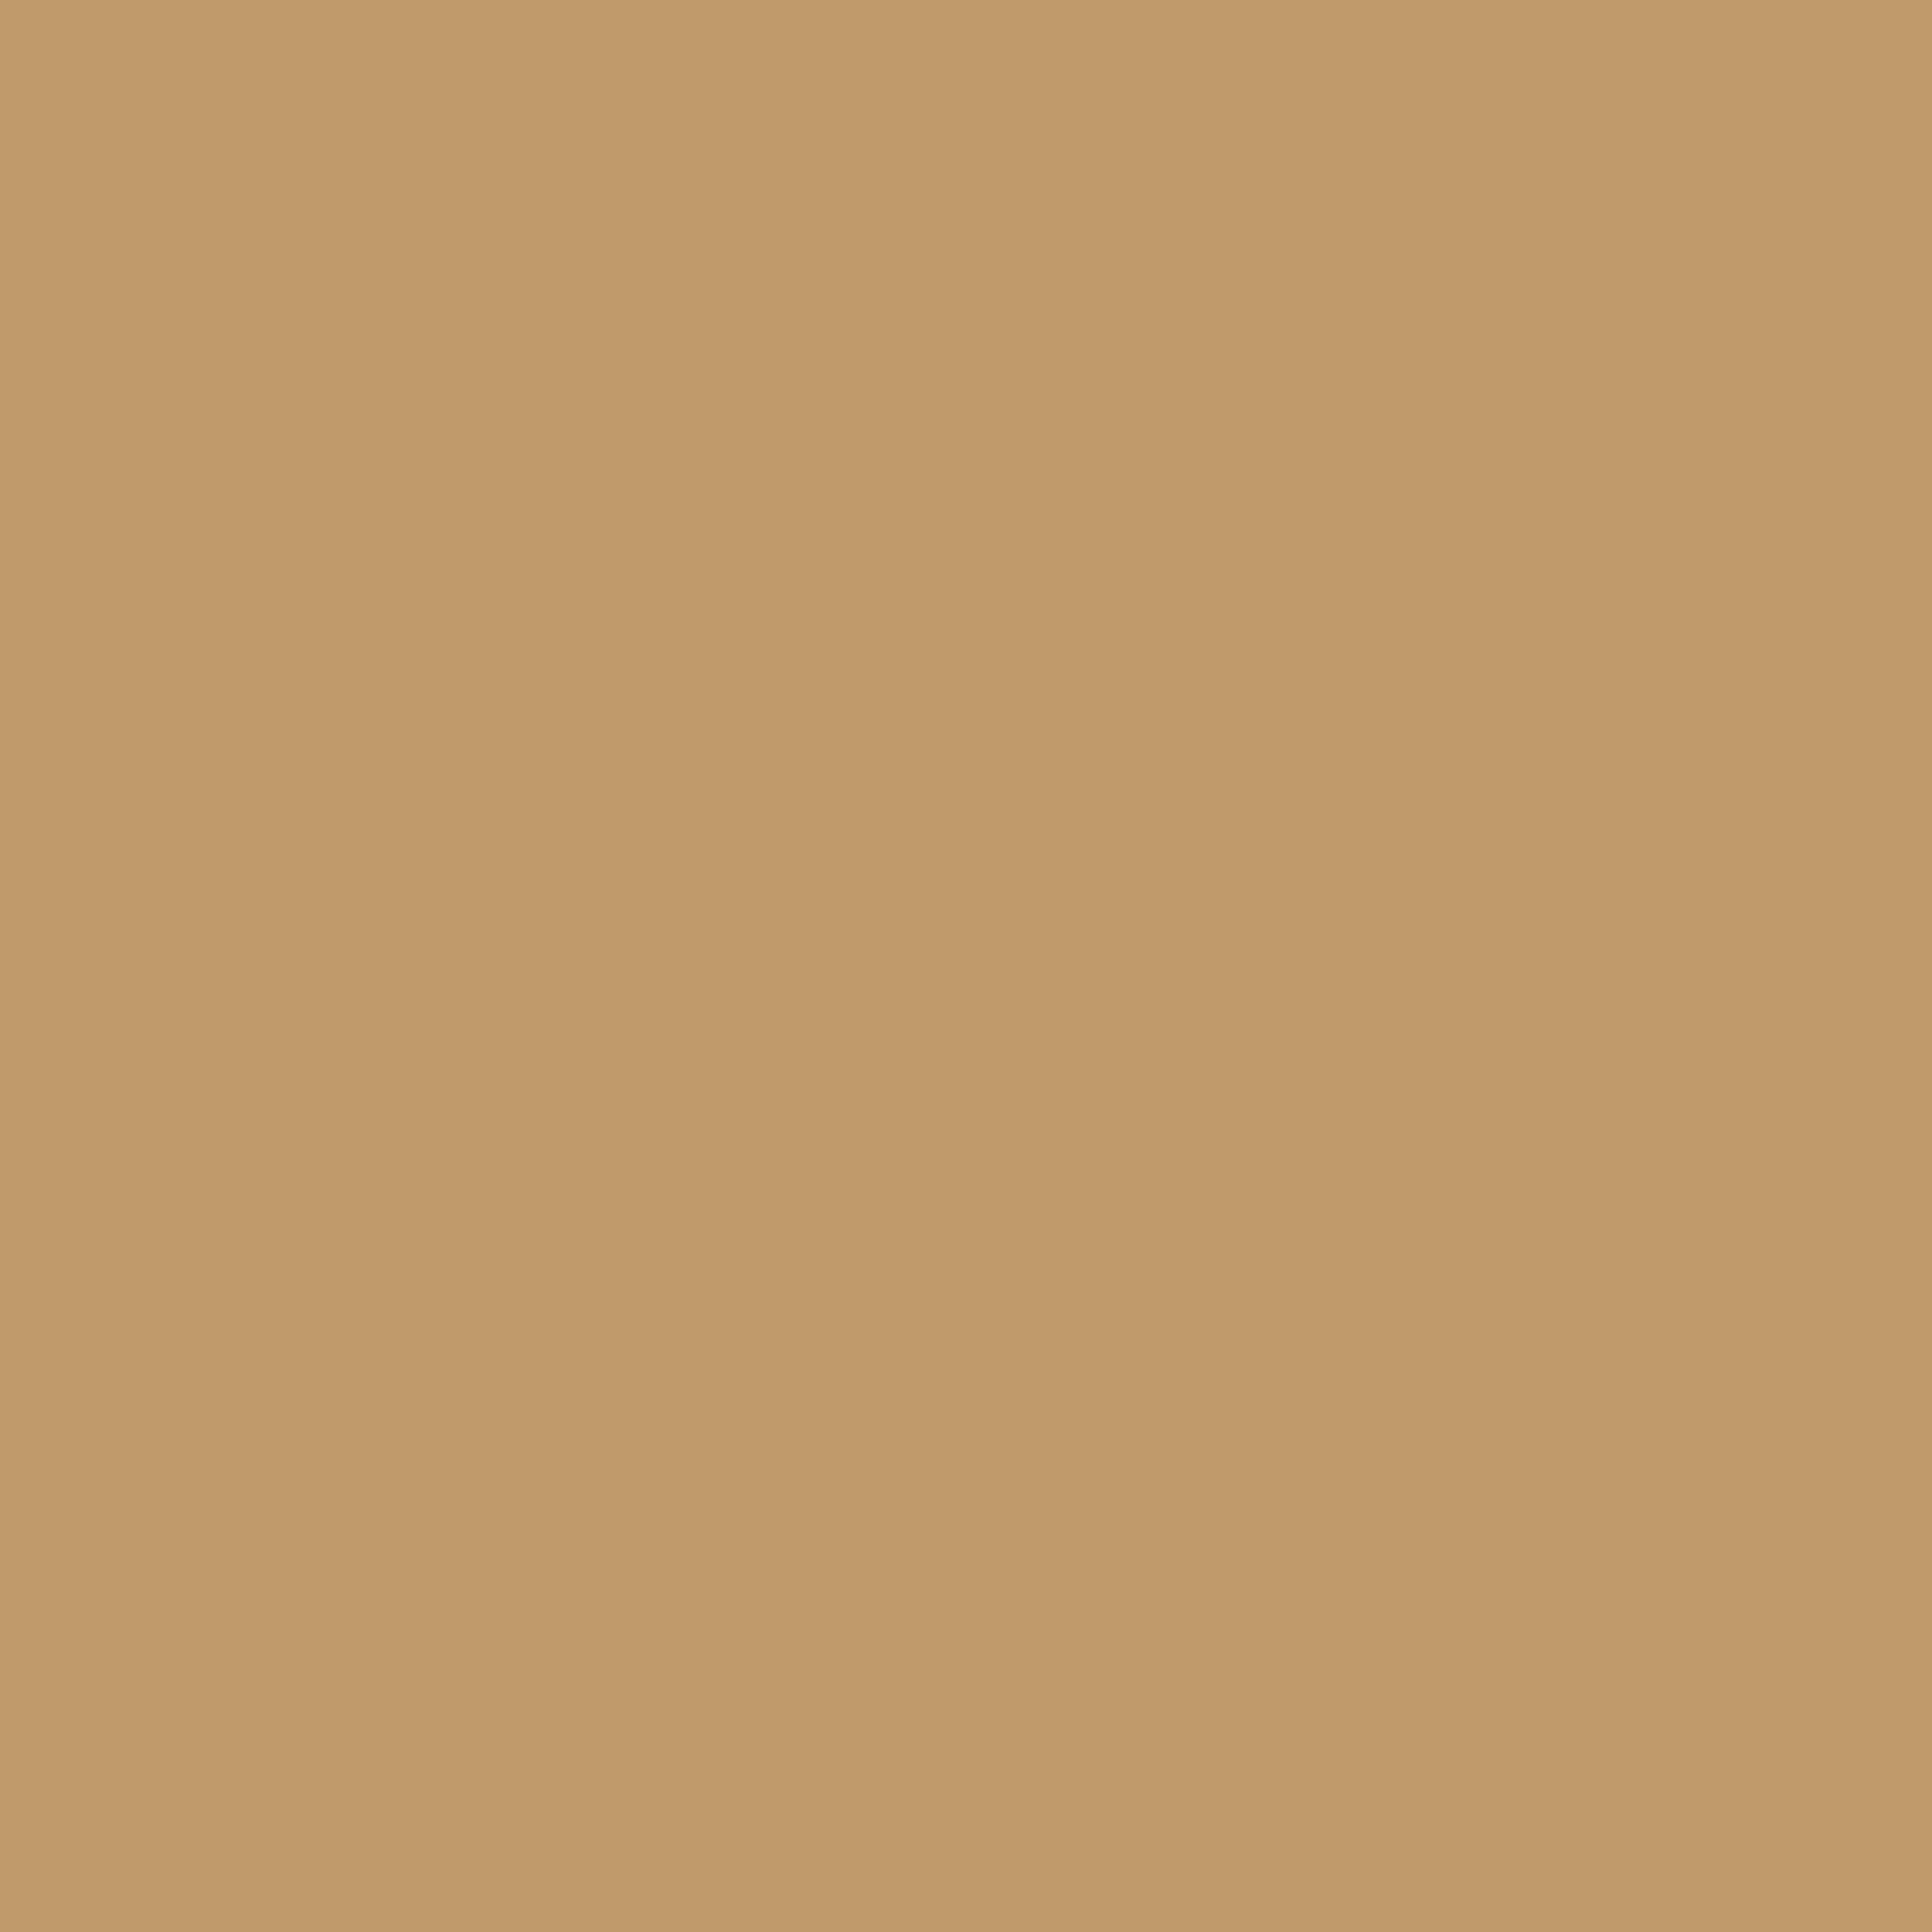 2732x2732 Camel Solid Color Background